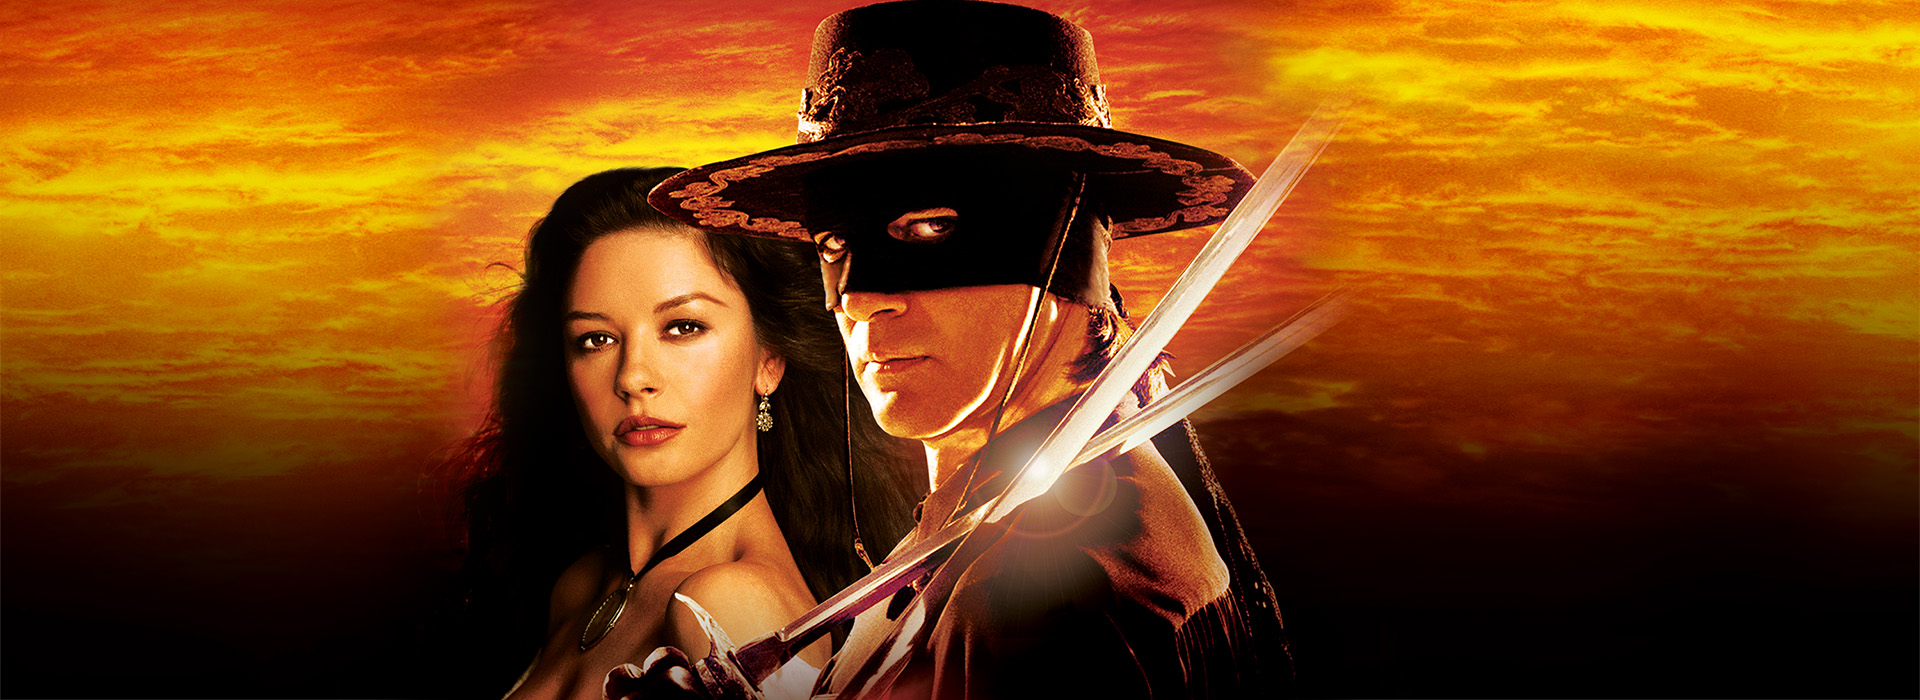 Movie poster The Legend of Zorro